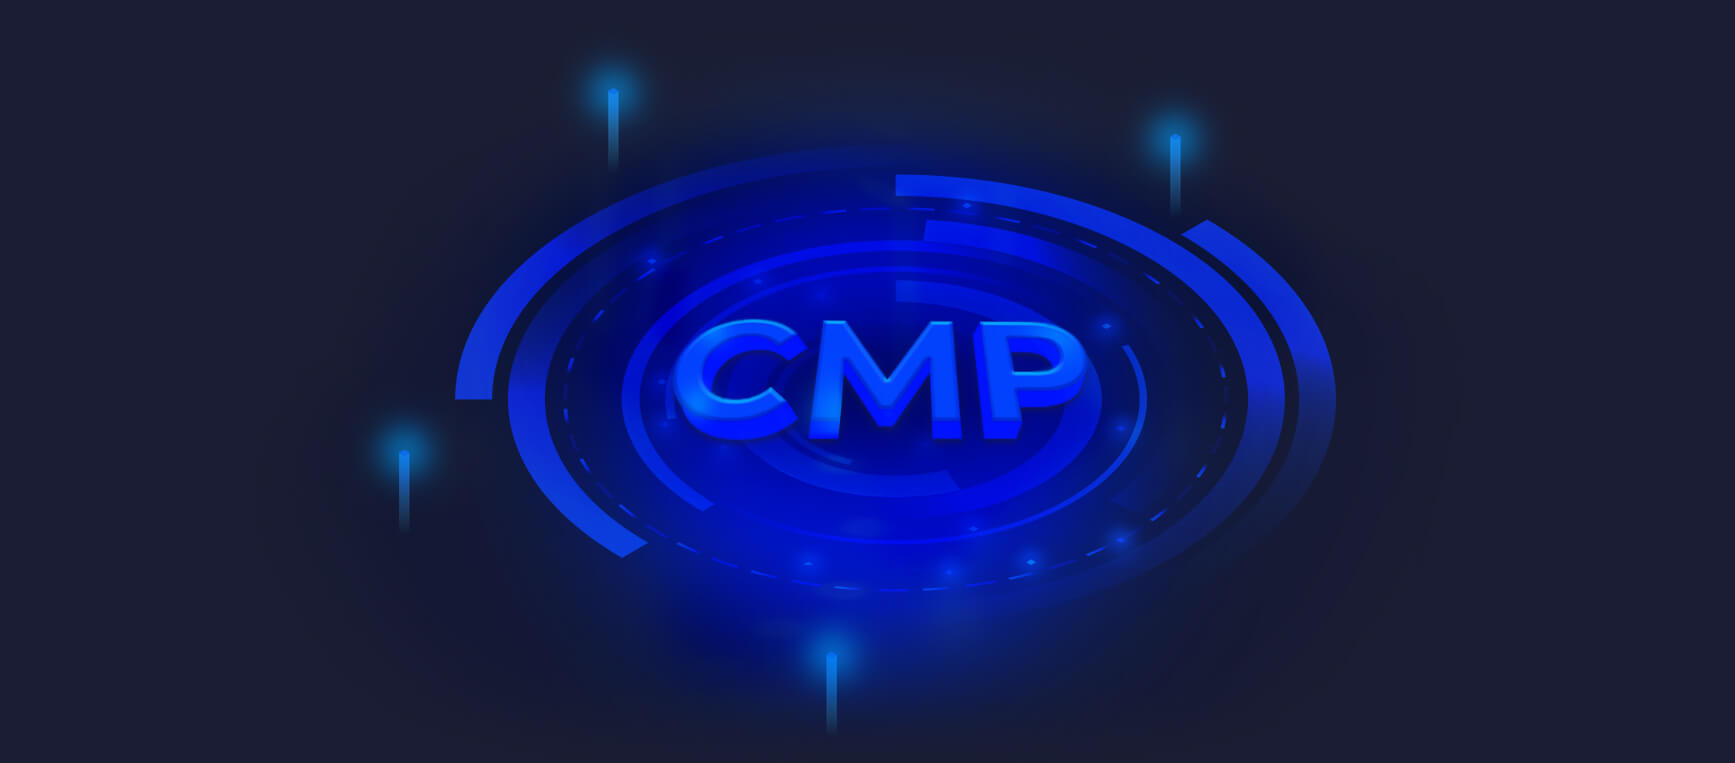 Creative Management Platforms (CMP) and digital transformation